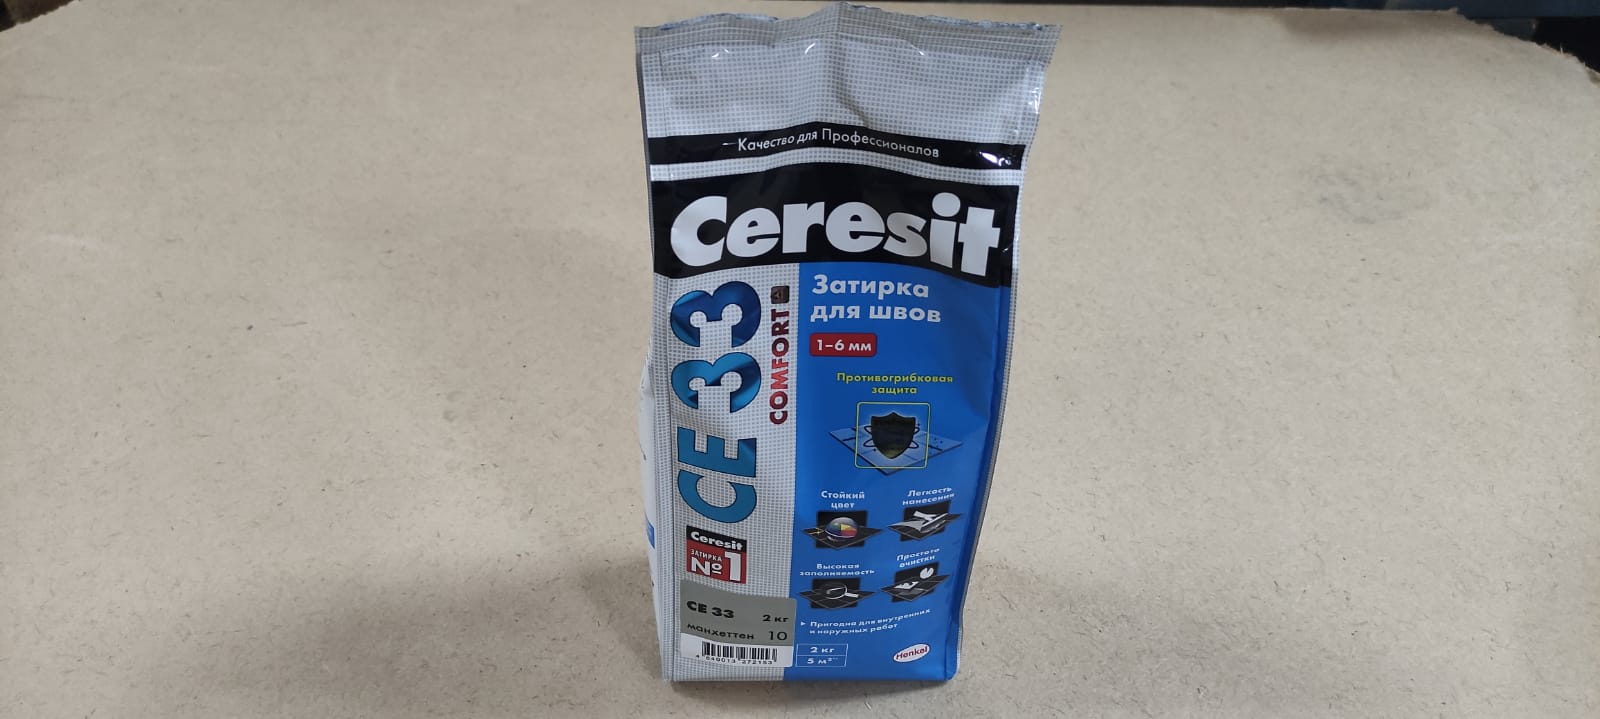 Затирка для швов 1-6 мм Ceresit / Церезит СЕ 33 Comfort 2 кг (цвет: Манхеттен)